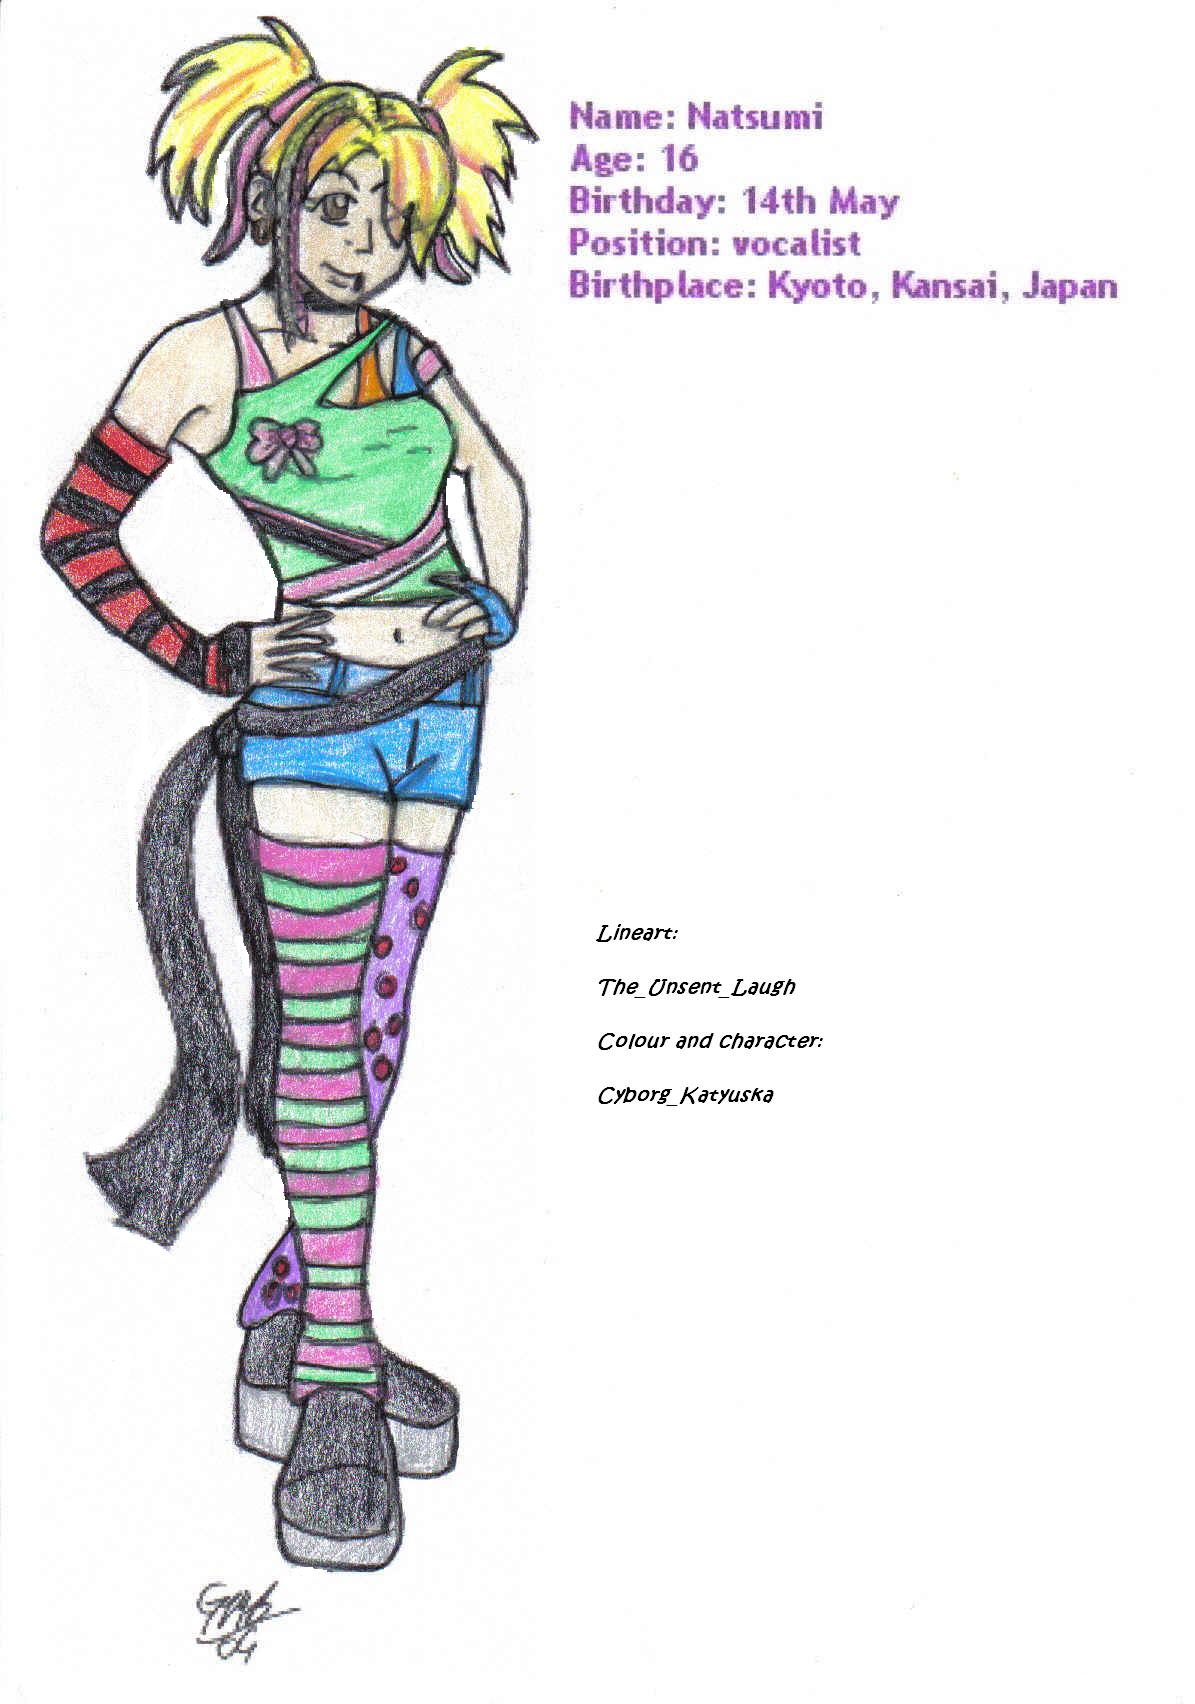 Natsumi Profile Coloured by cyborg_katyuska